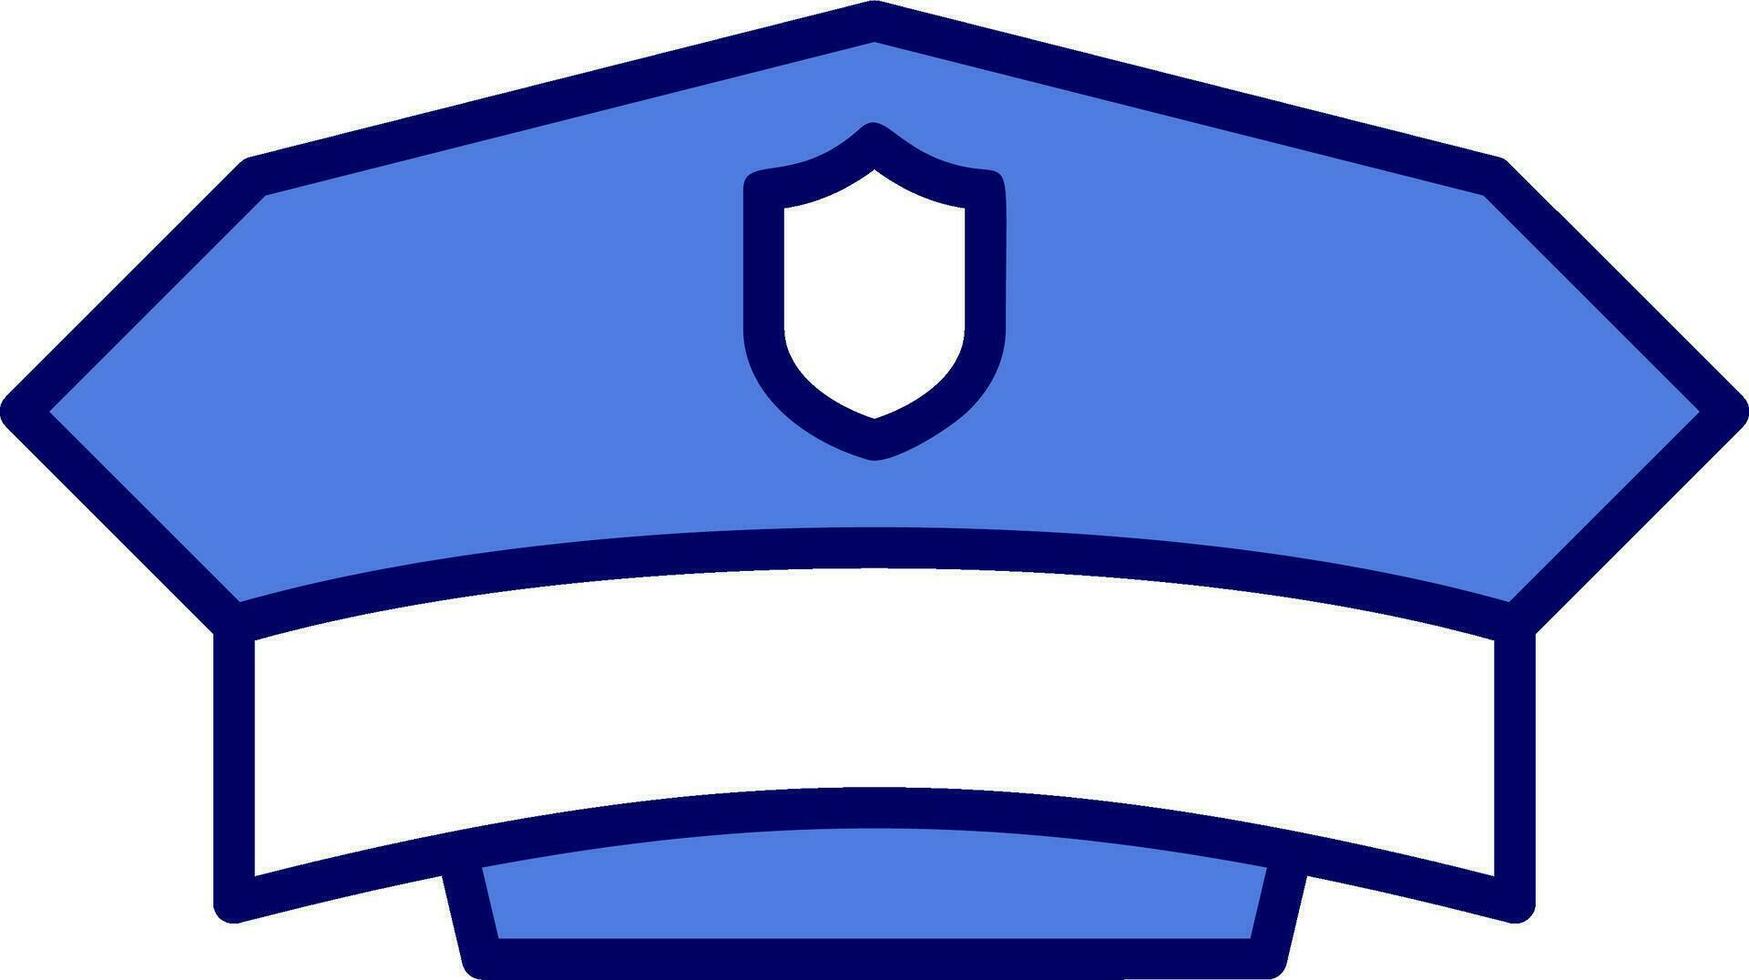 Polizeihut-Vektorsymbol vektor